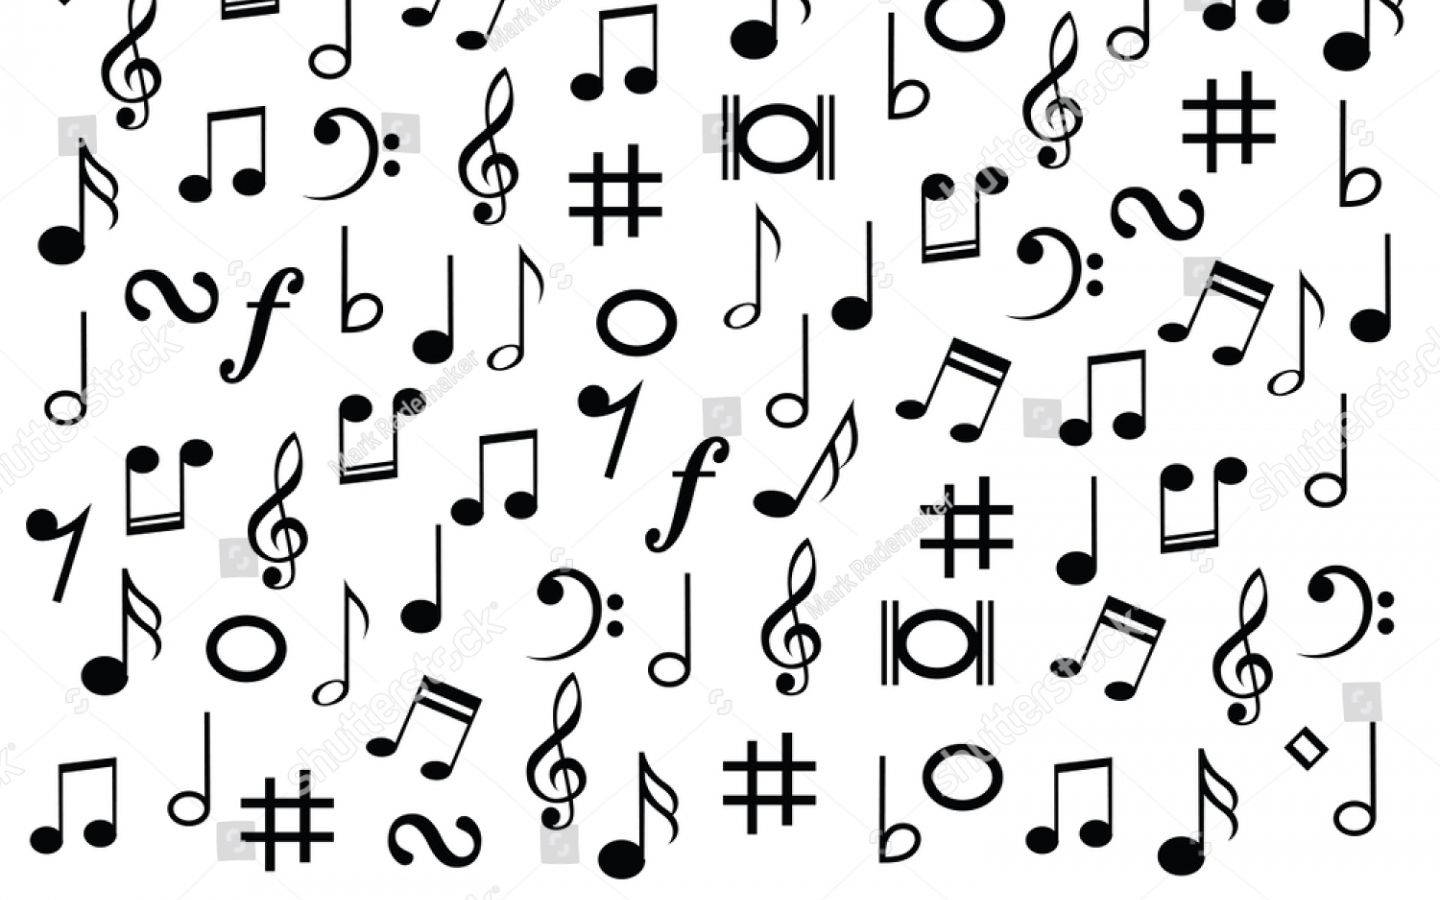 Music Symbols Black and White Art Wallpaper